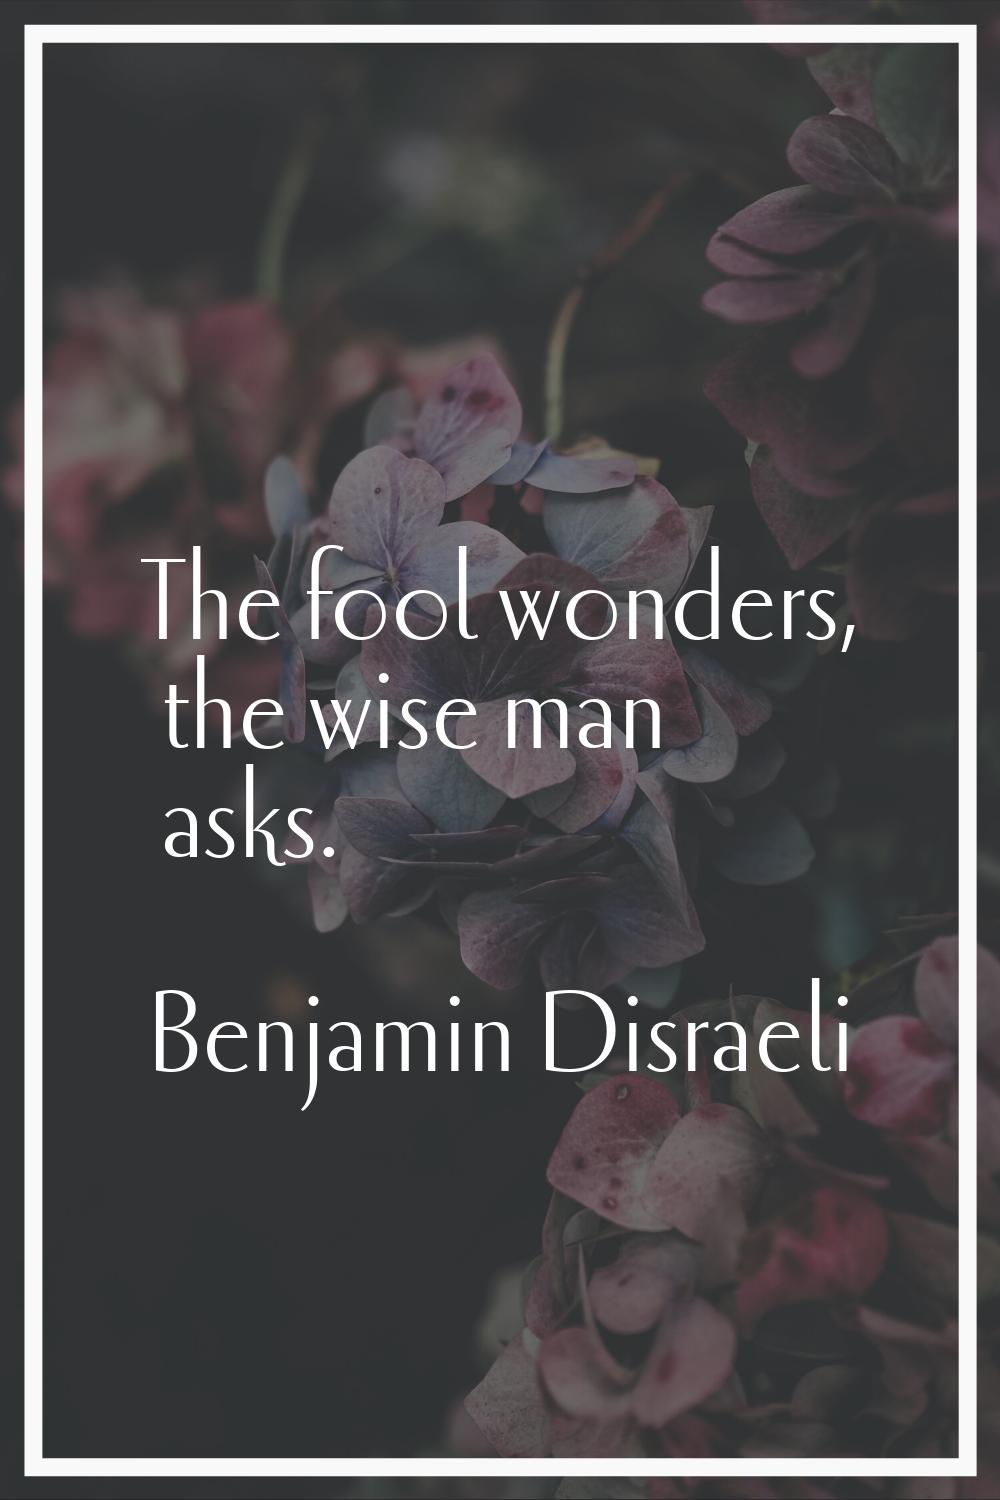 The fool wonders, the wise man asks.